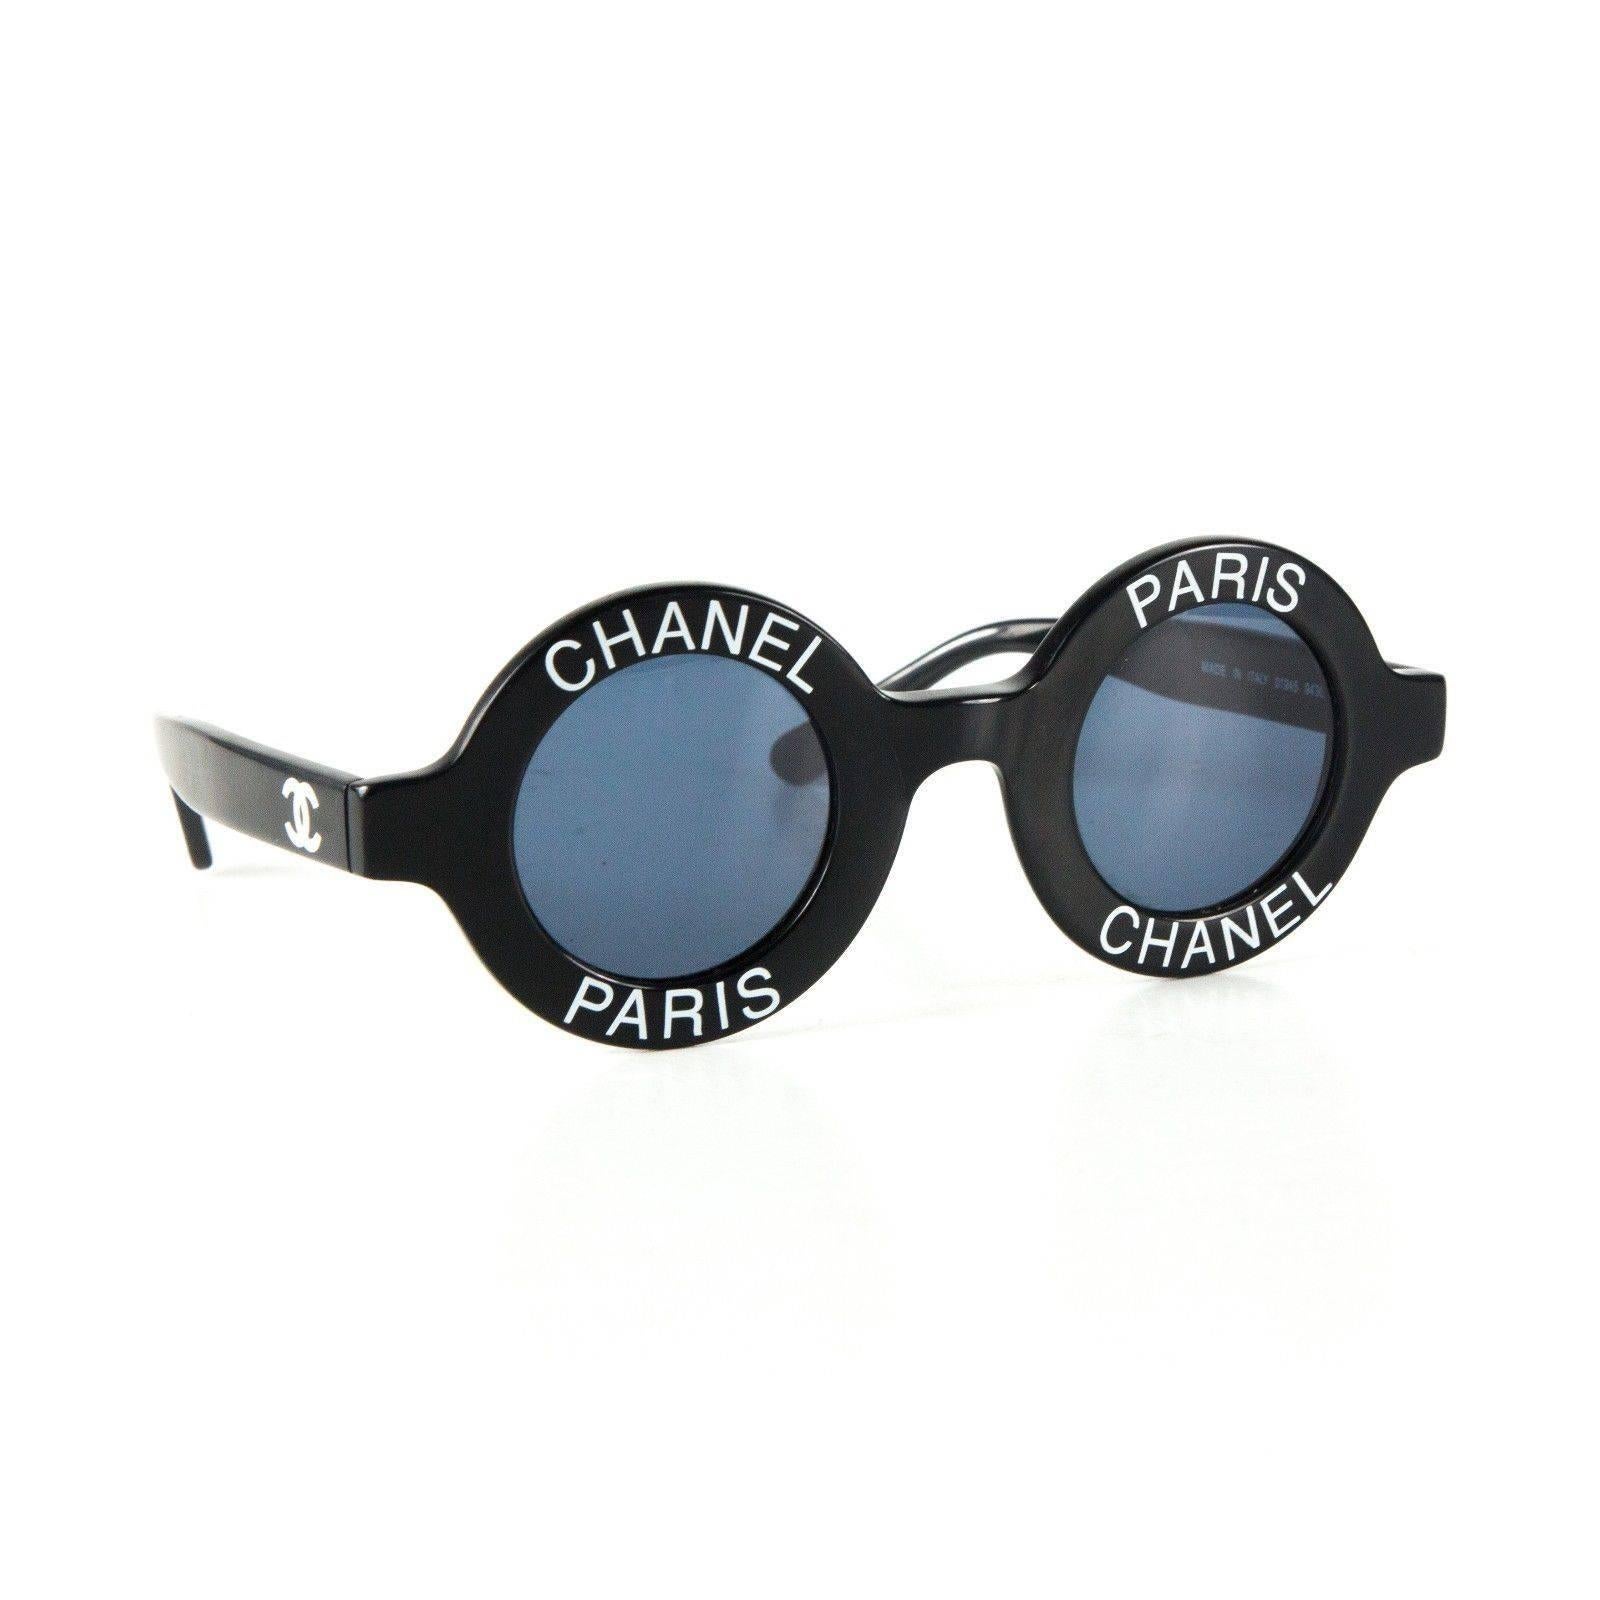 chanel paris round sunglasses fake